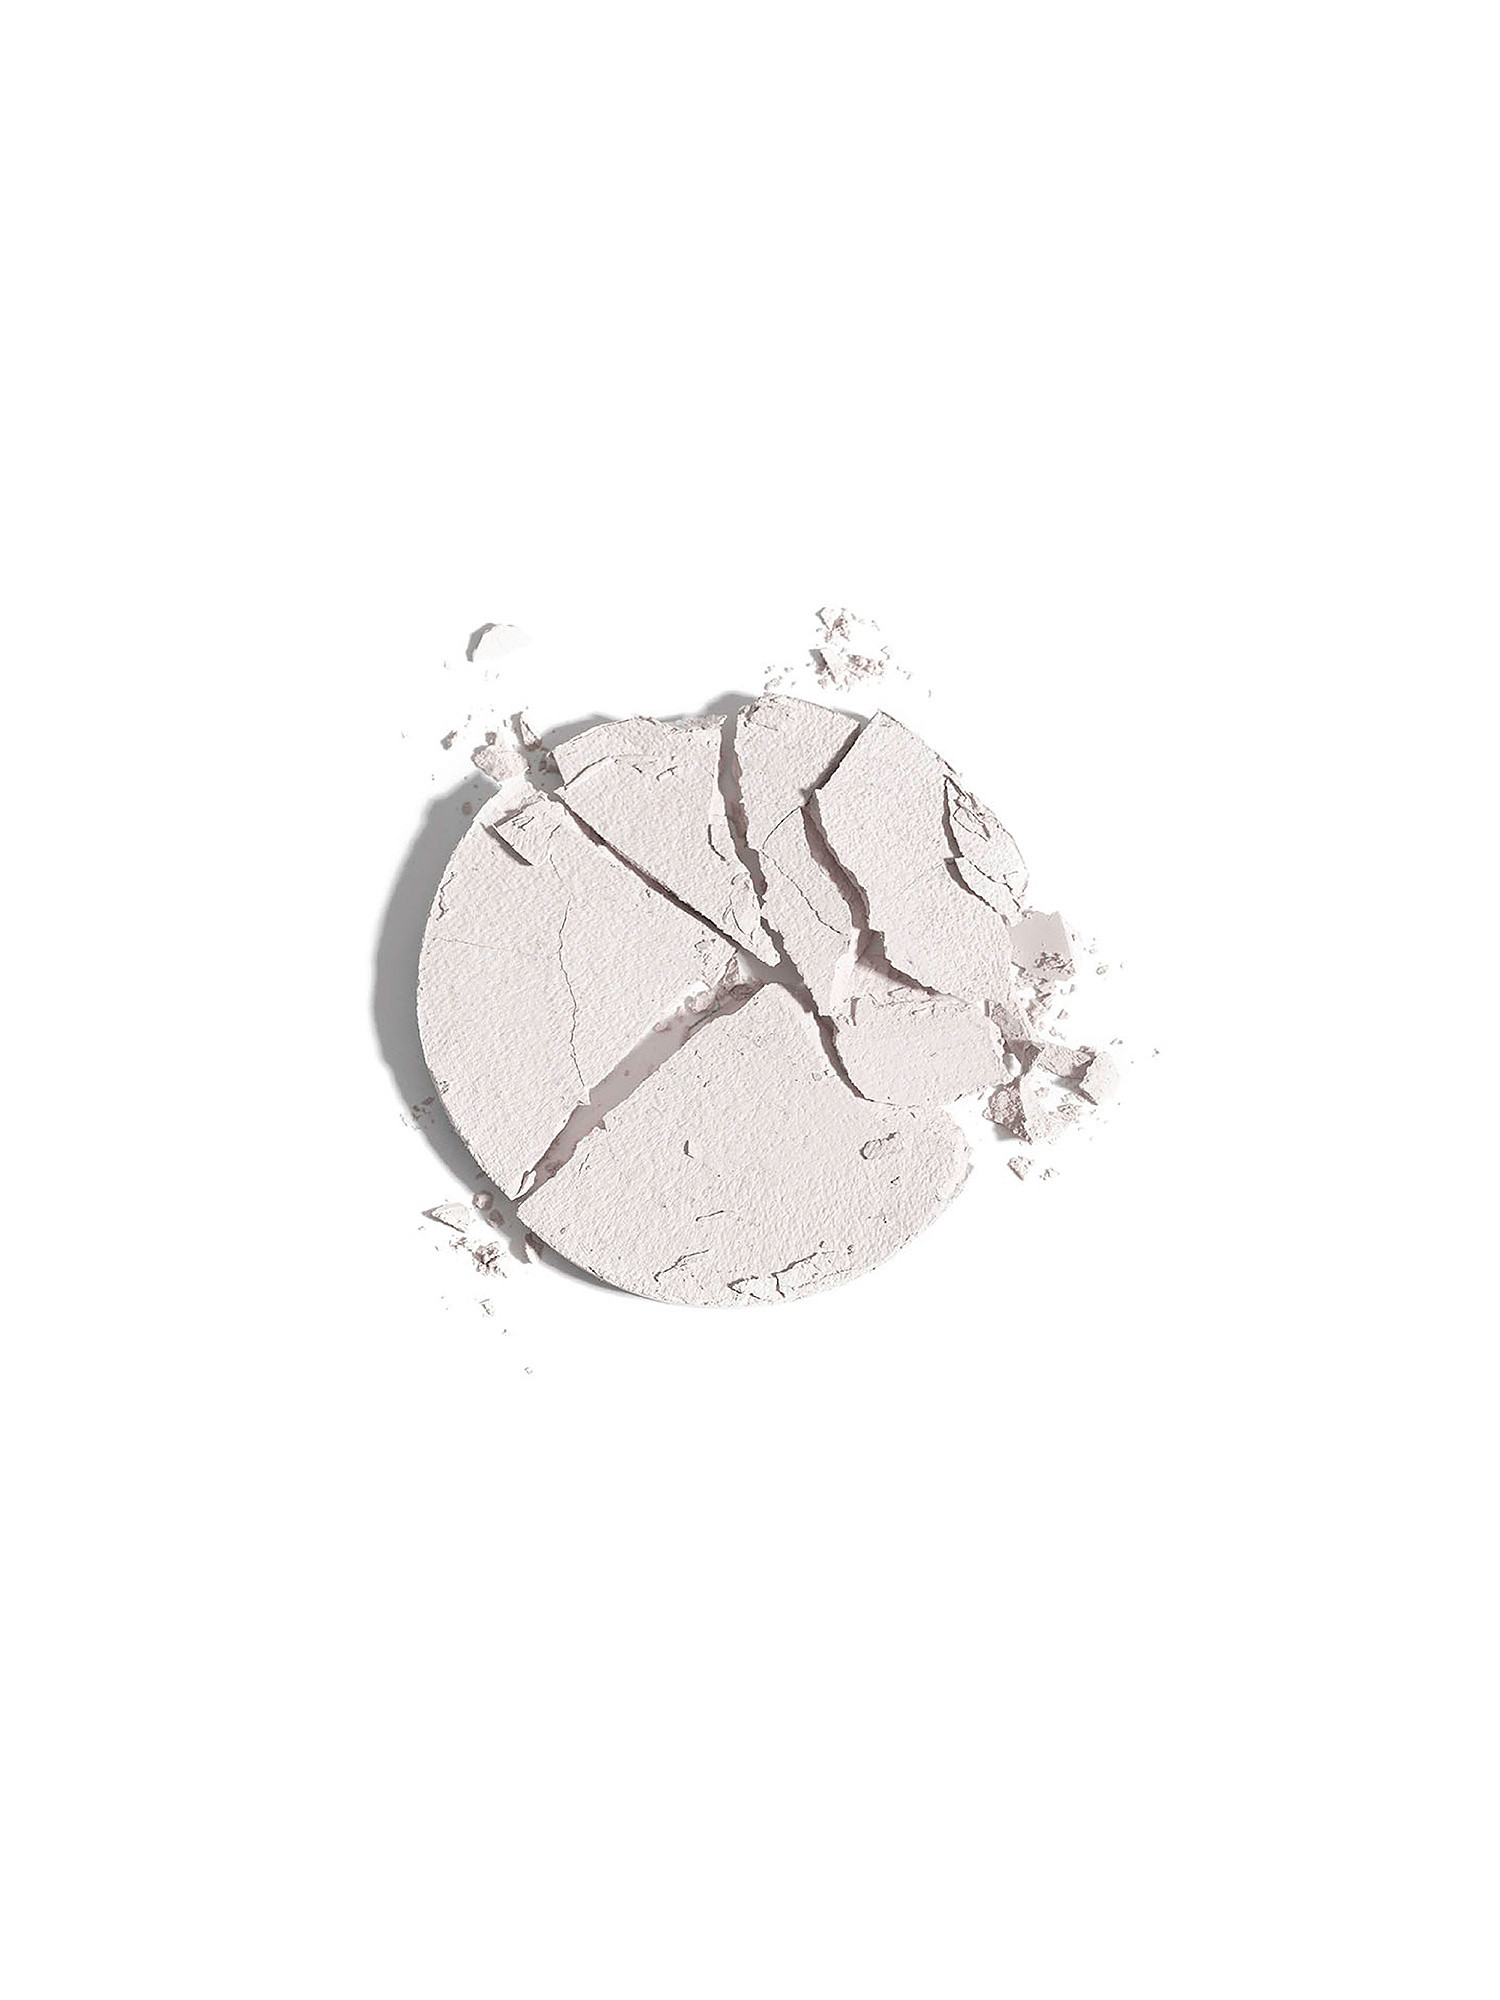 Makeupstudio Polvere Compatta Per Occhi Opaca - 151 optical white, Bianco, large image number 1